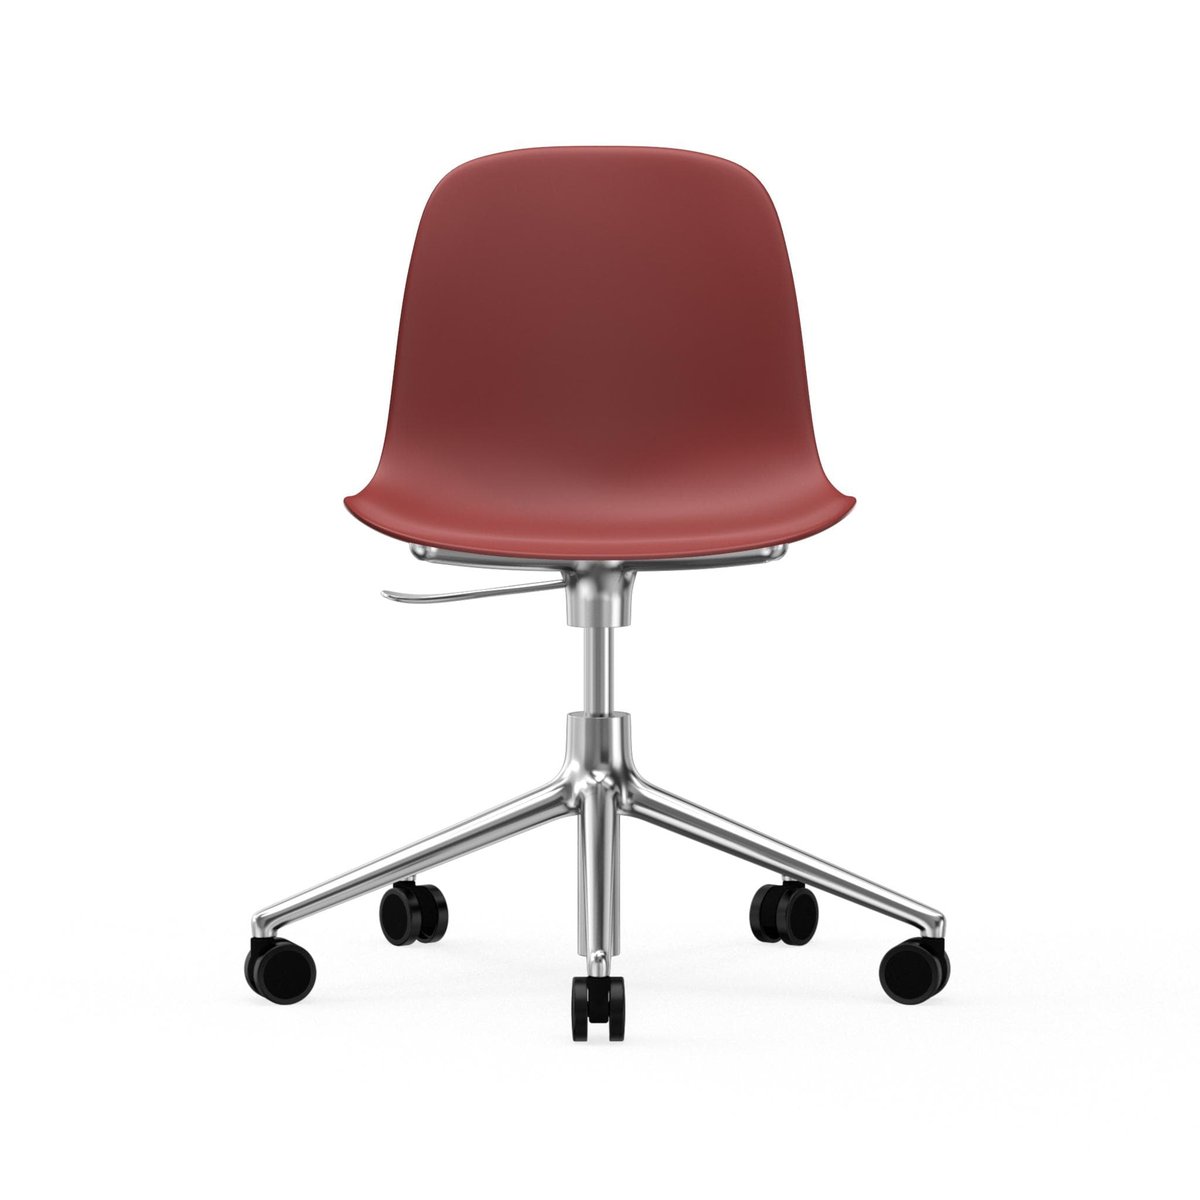 Normann Copenhagen Form chair drejestol 5W kontorstol rød aluminium hjul